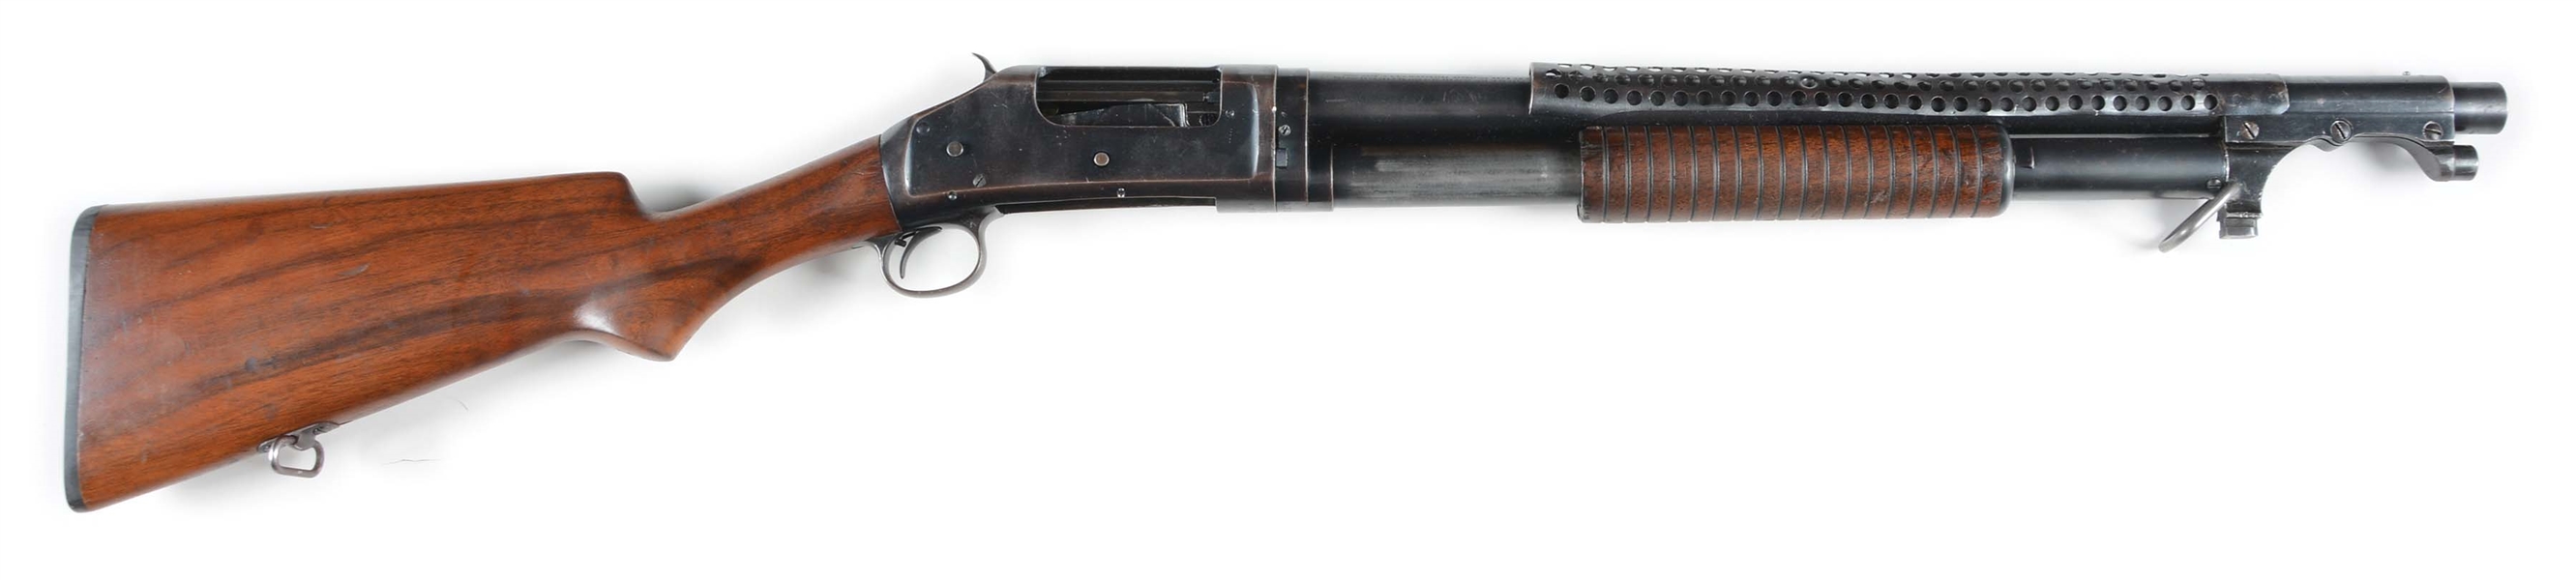 (C) US WINCHESTER MODEL 1897 PUMP ACTION TRENCH GUN.